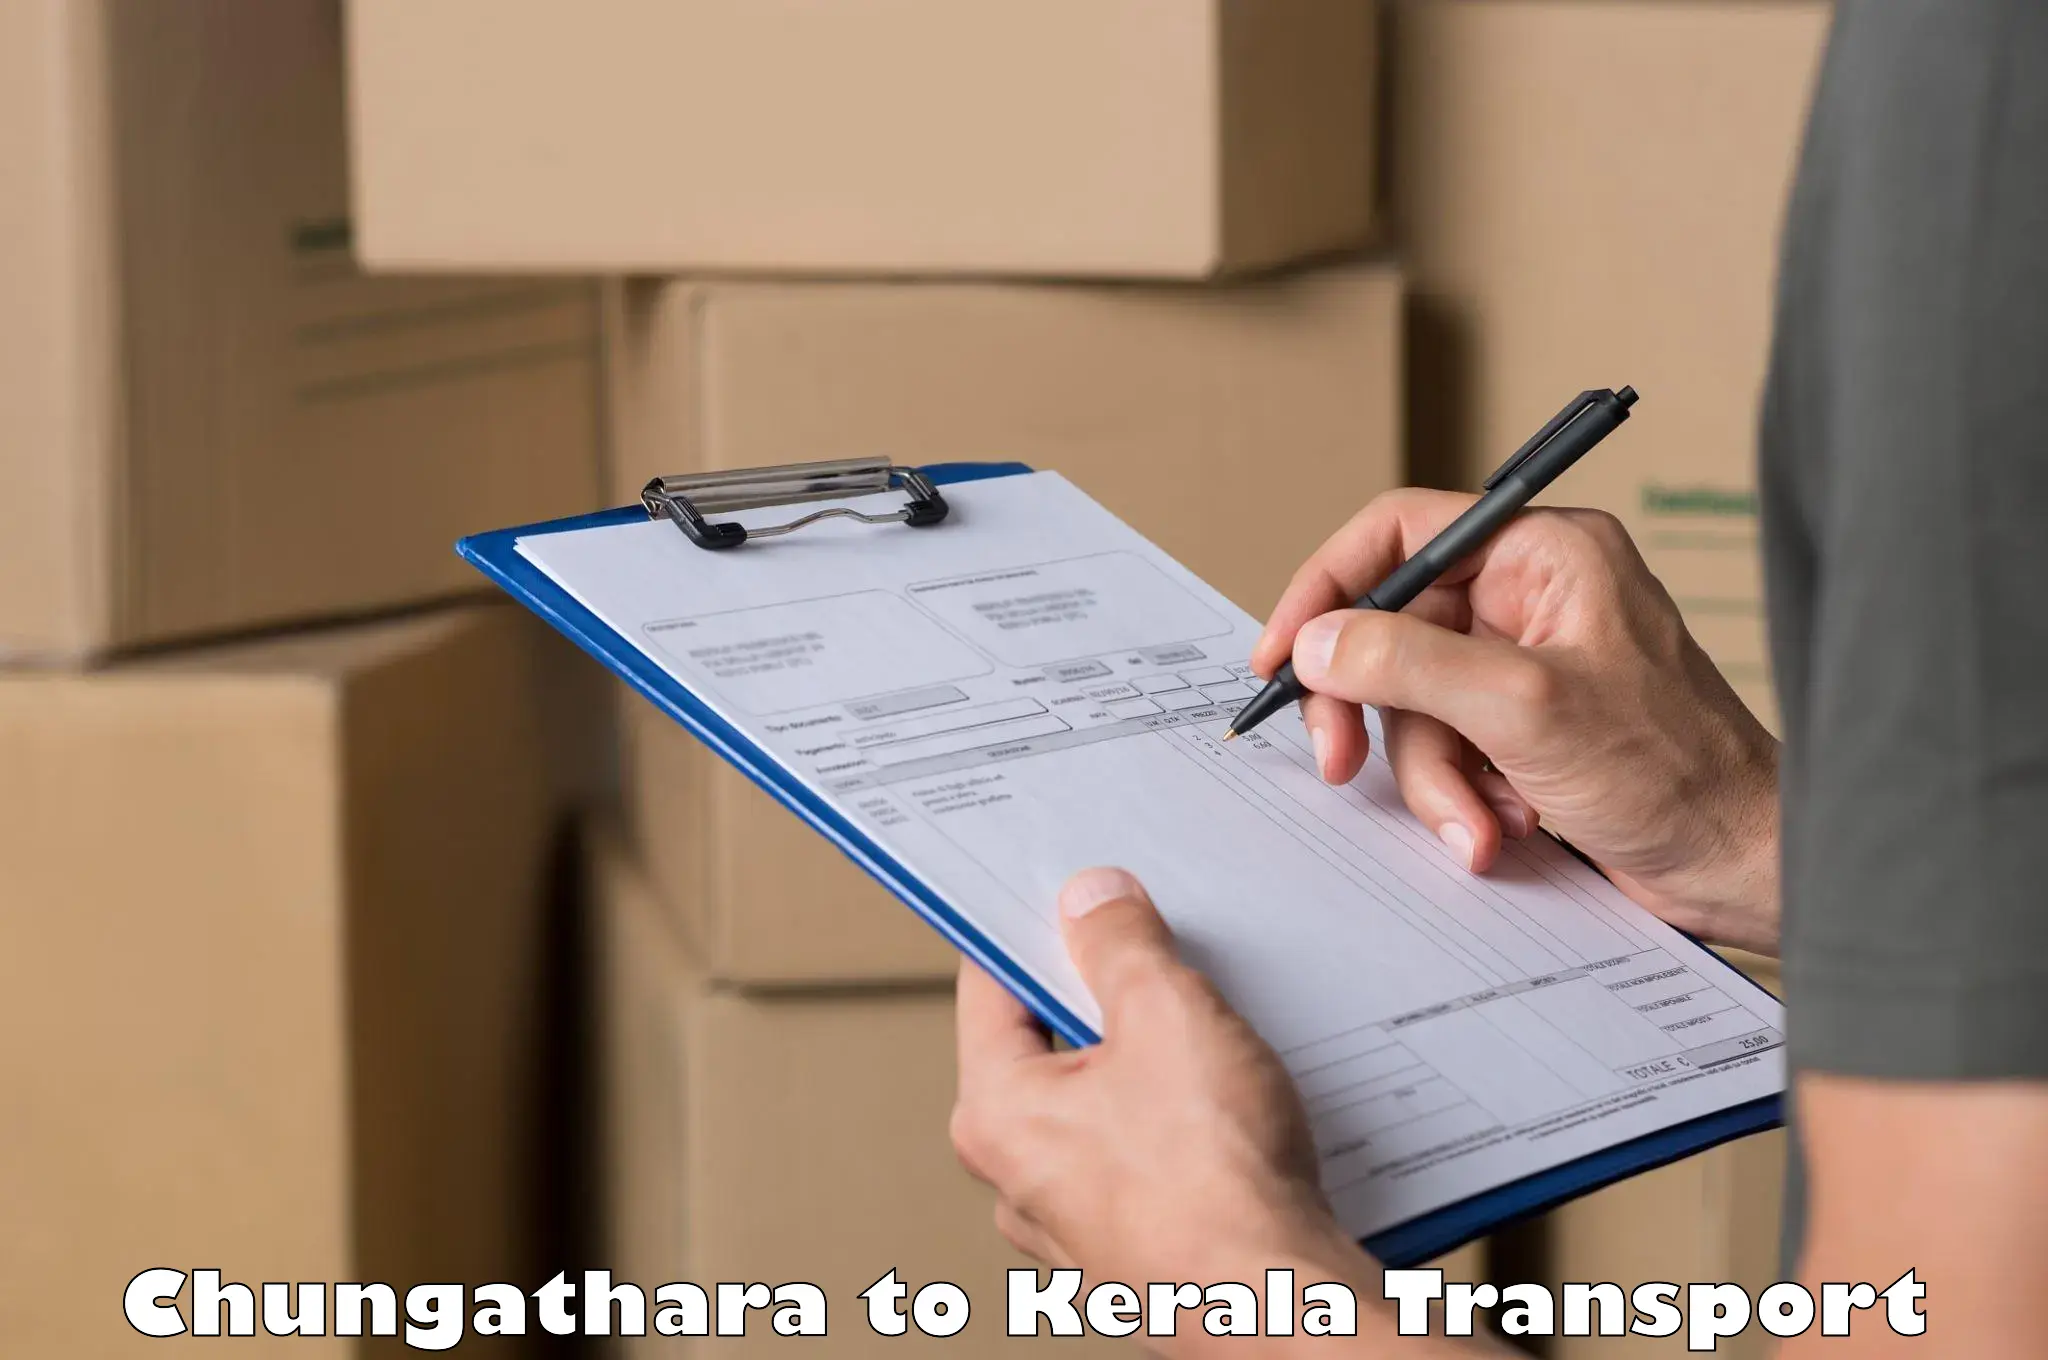 Truck transport companies in India Chungathara to Aluva